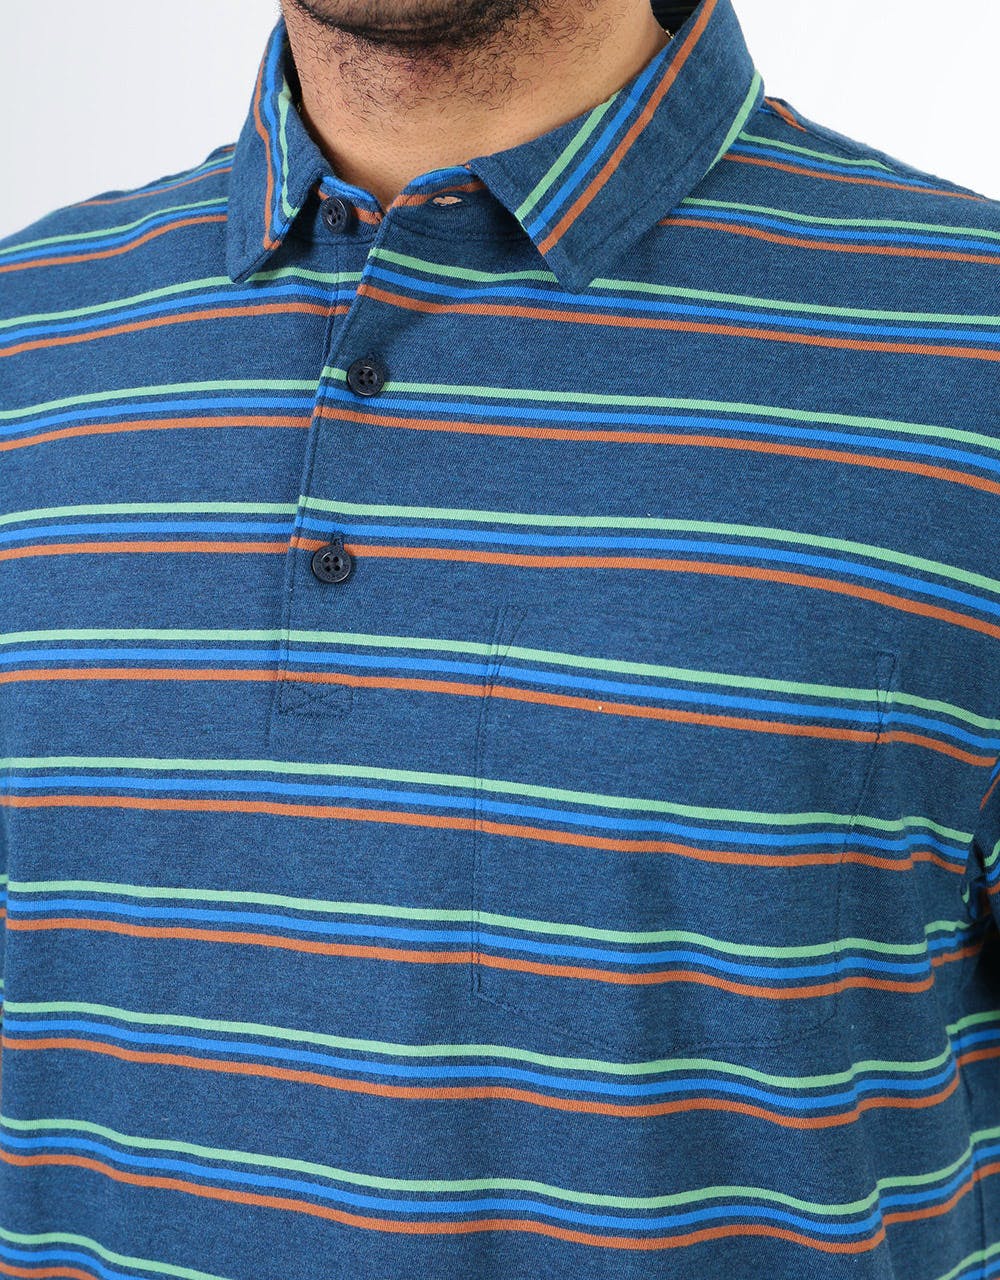 Patagonia Organic Cotton Lightweight Polo Shirt - Pacific Stripe:Stone